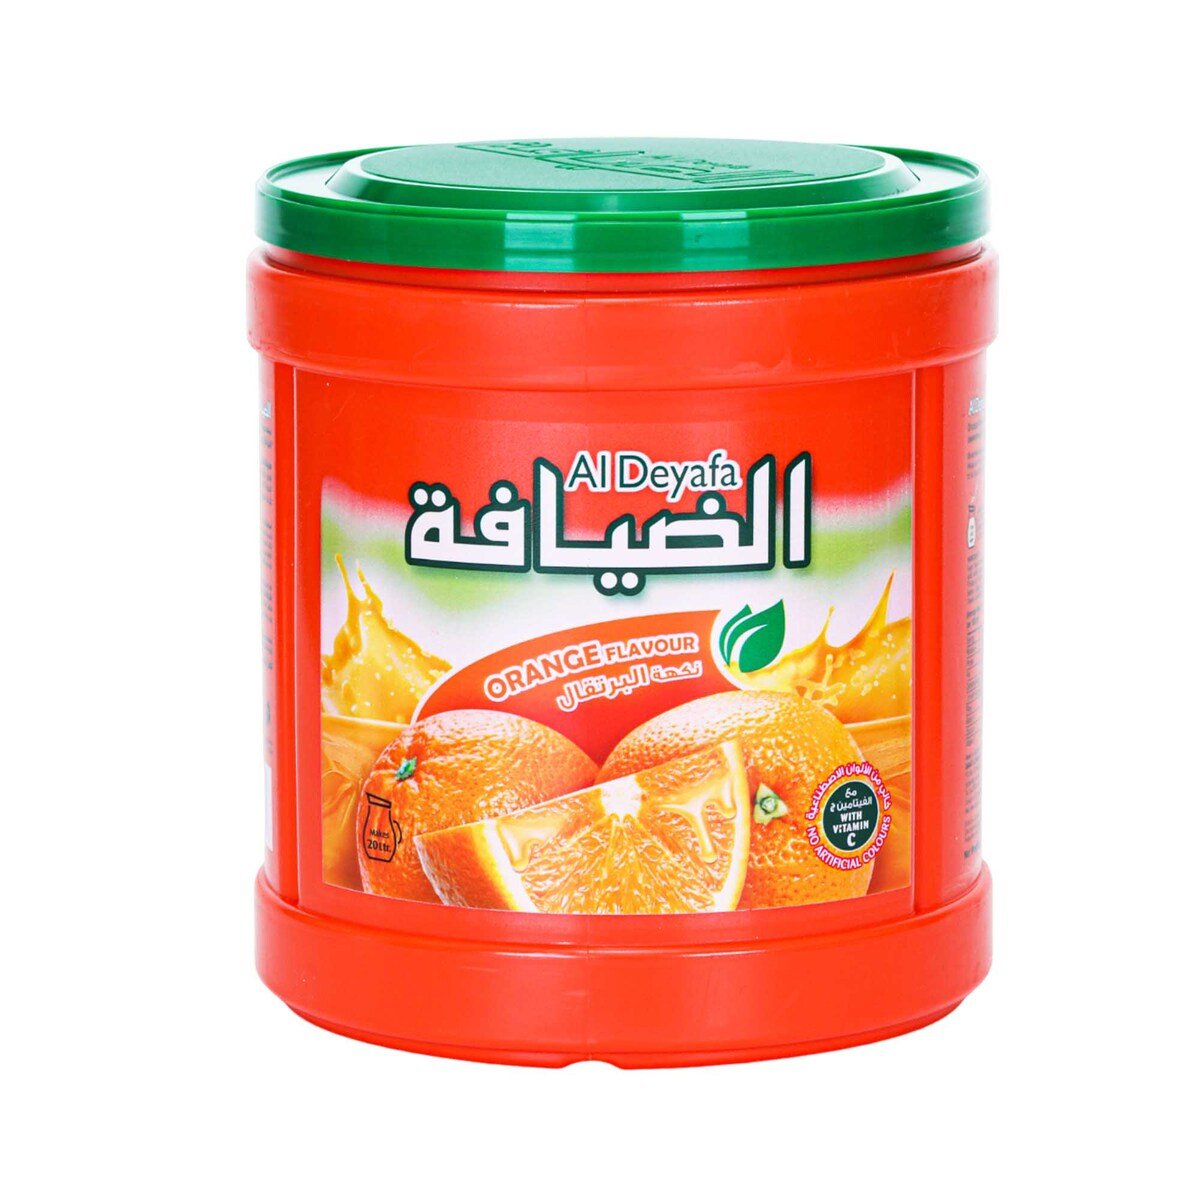 Al Deyafa Orange Instant Powdered Drink 2.5 kg